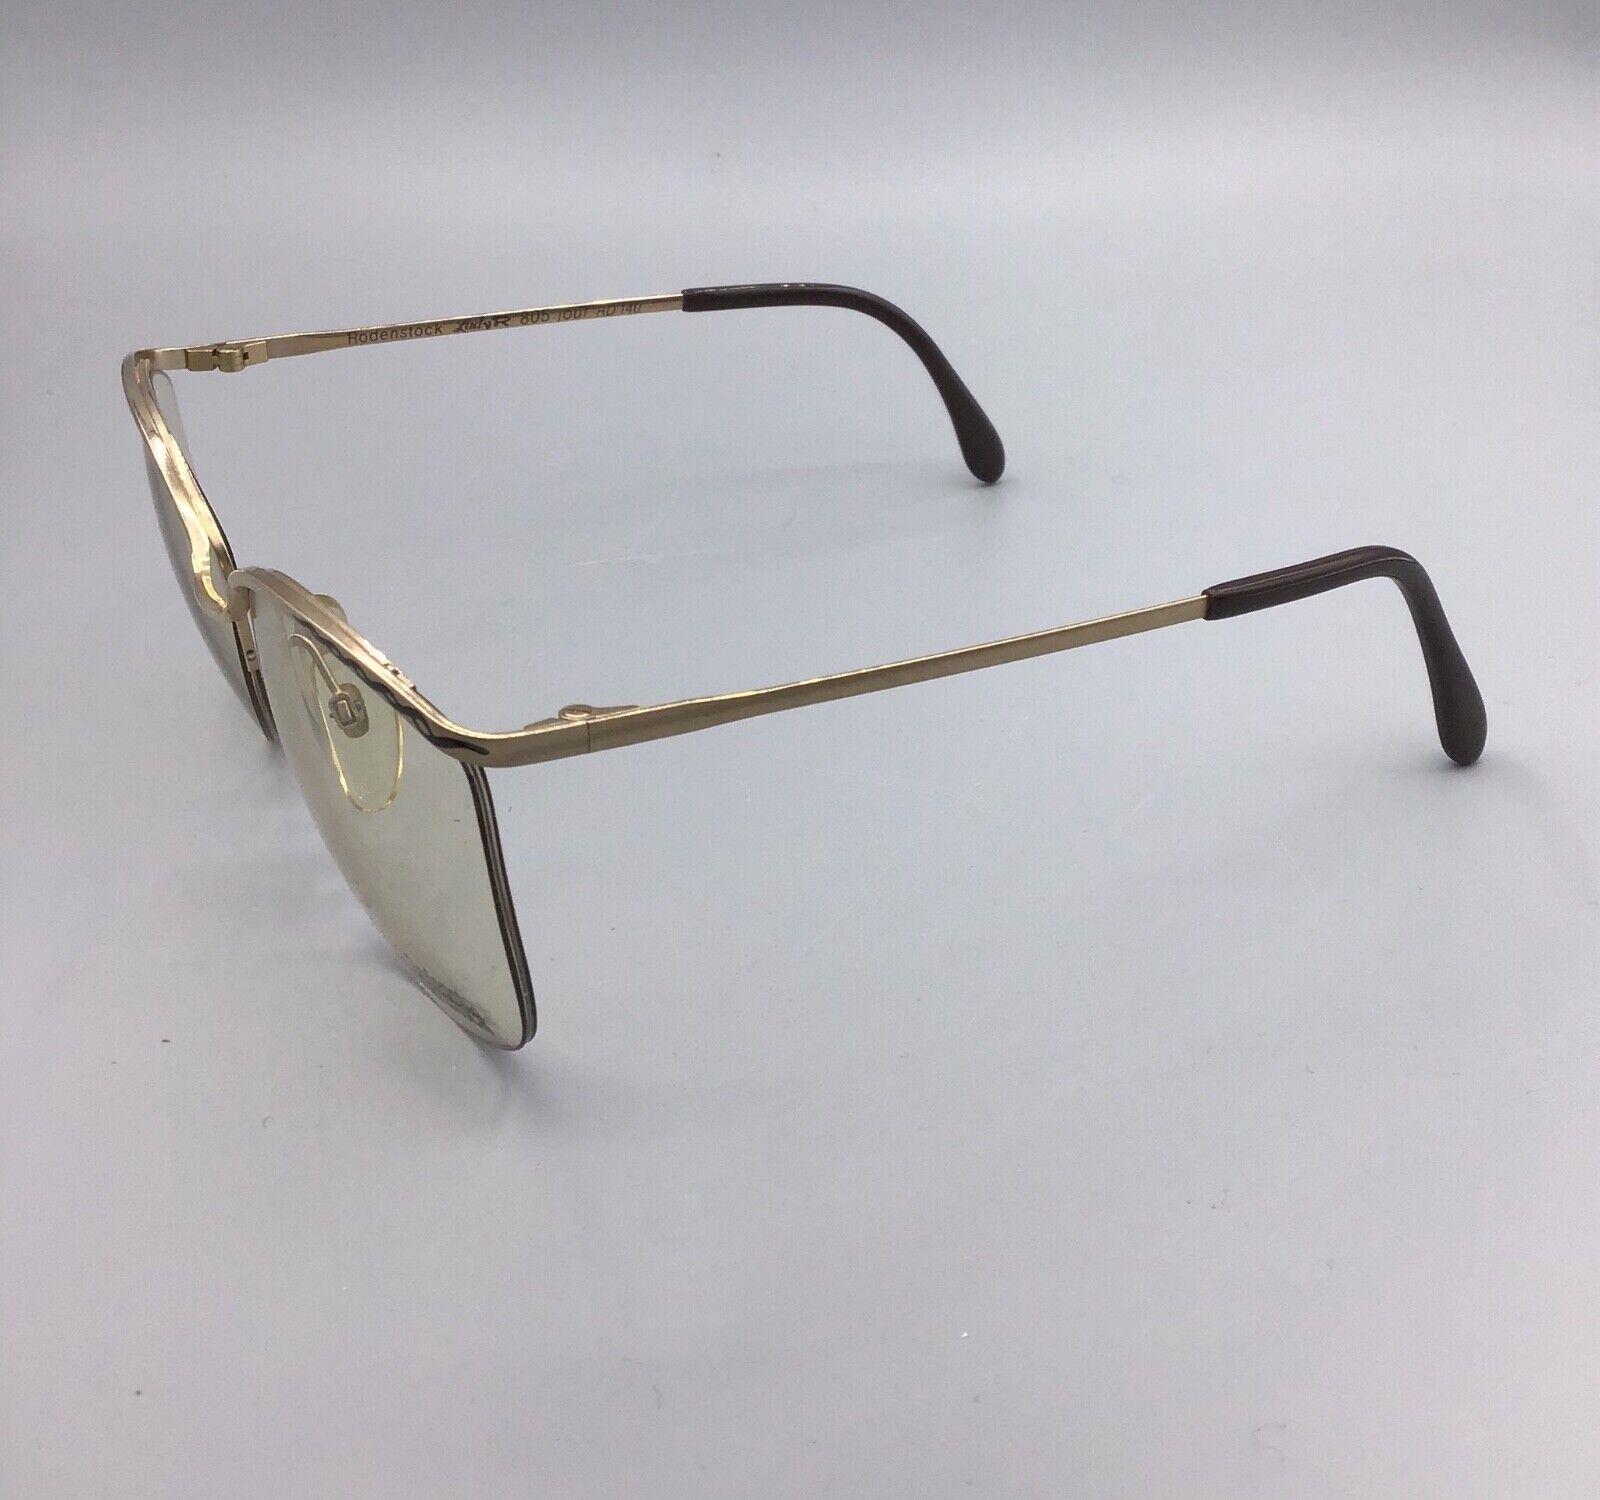 Rodenstock occhiale vintage Eyewear brillen lunettes modello Lady R 805 jour RD1/20 10k